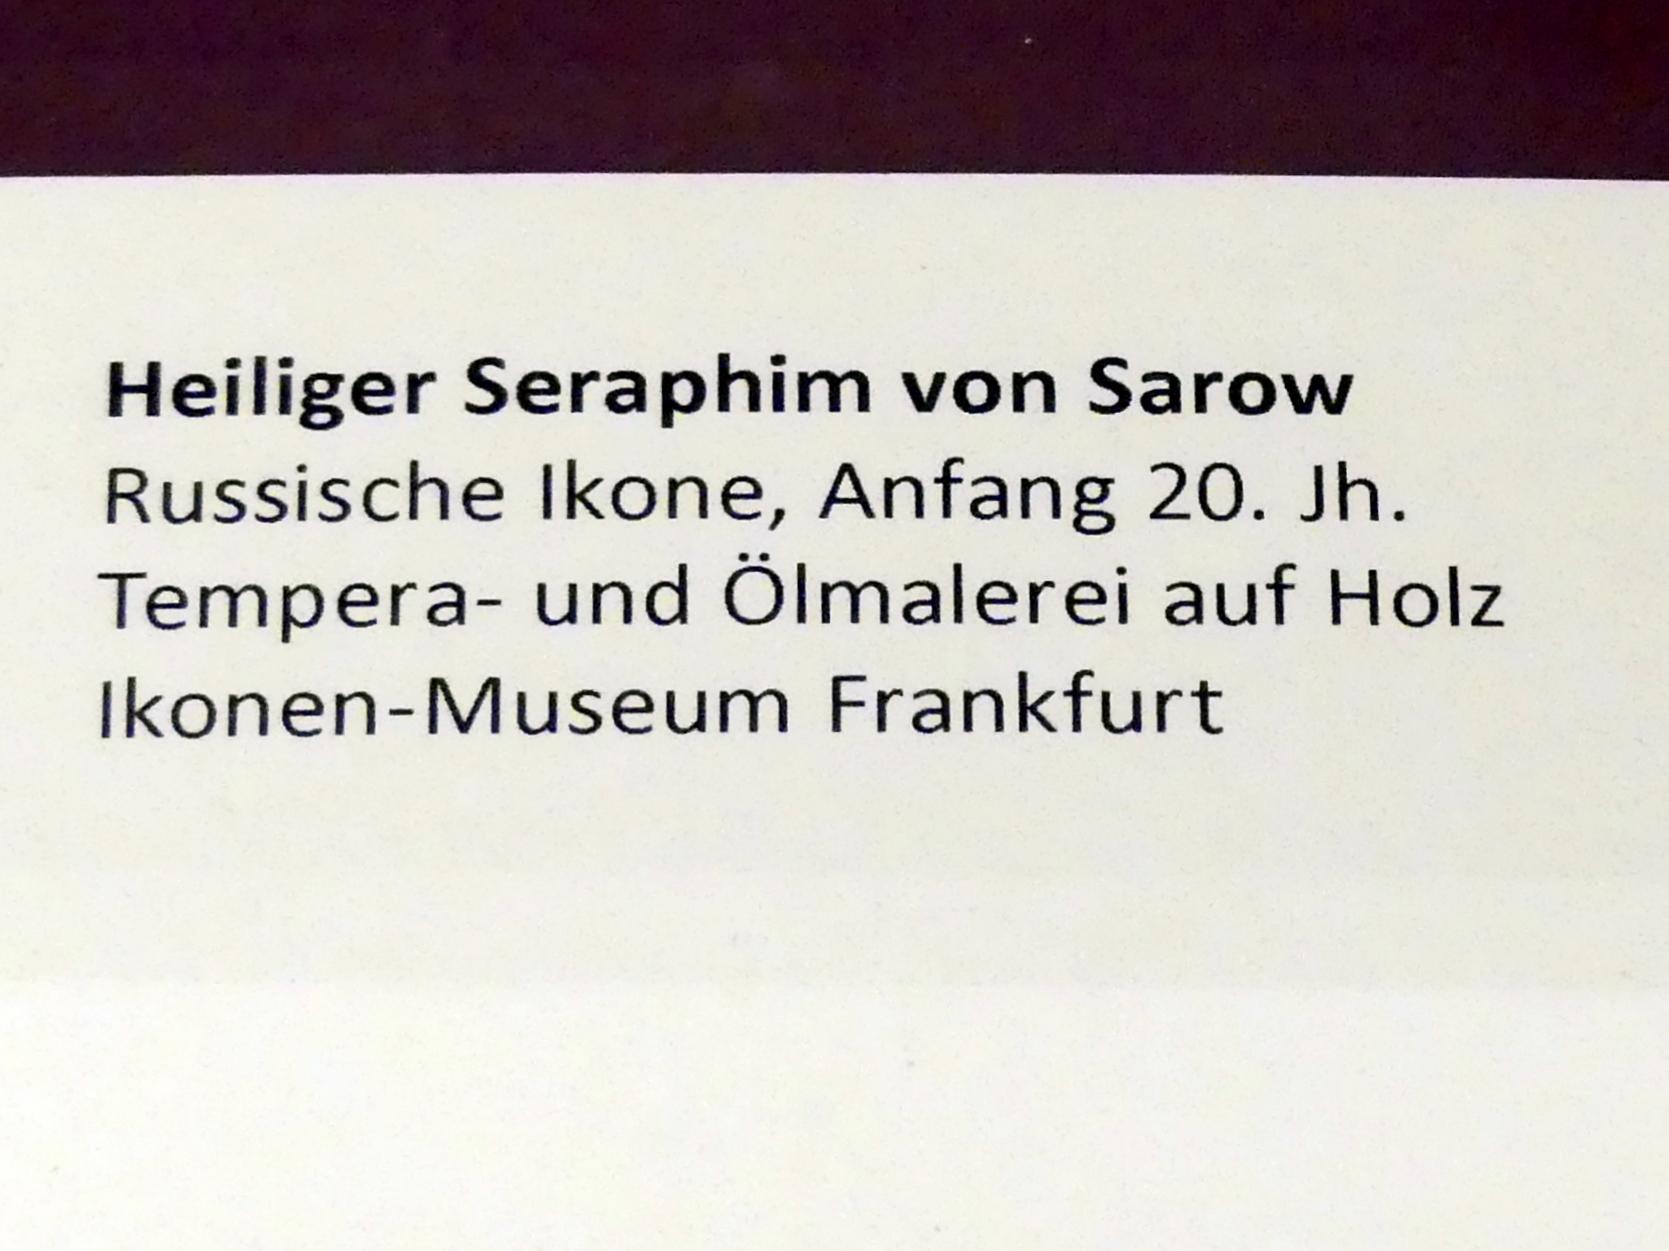 Heiliger Seraphim von Sarow, Frankfurt am Main, Ikonen-Museum, Obergeschoss, Beginn 20. Jhd., Bild 2/2